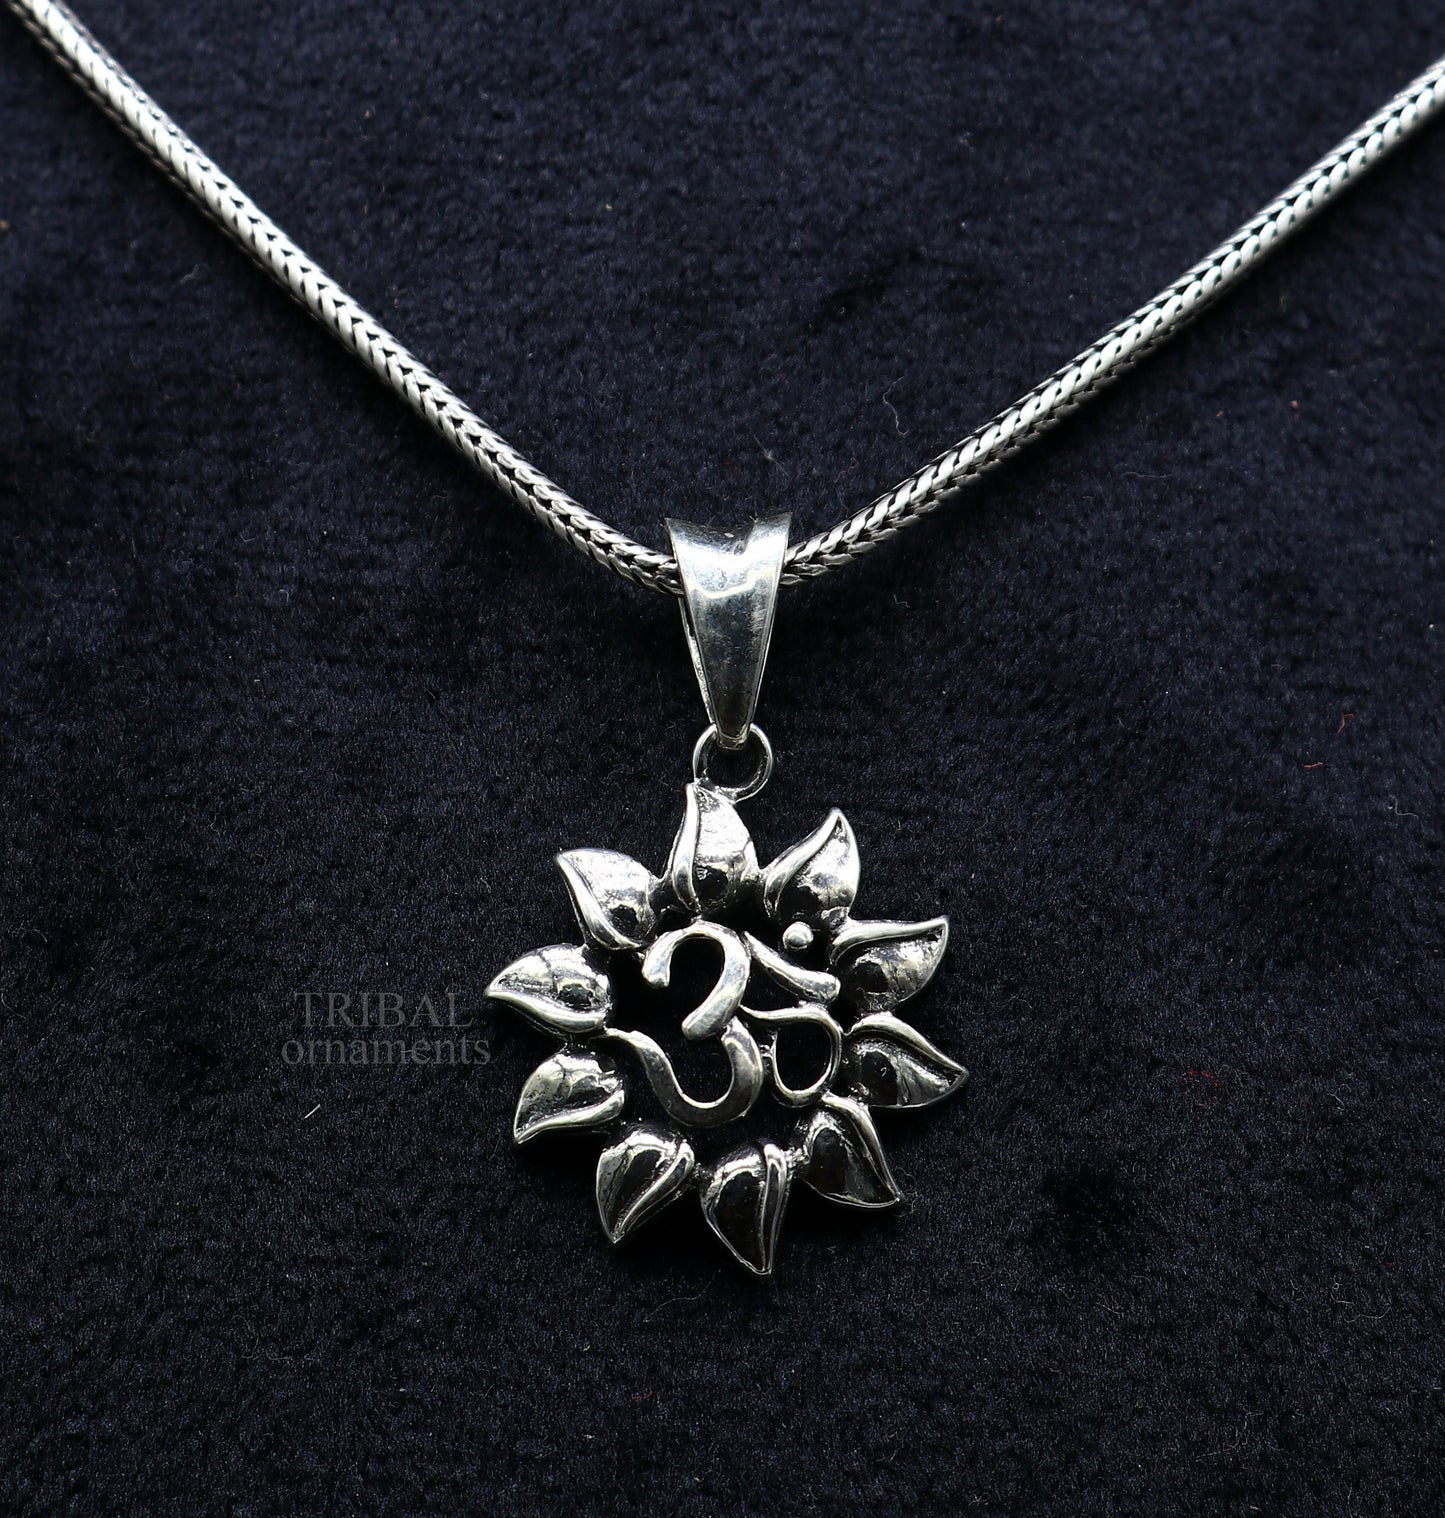 925 sterling silver handmade Hindu mantra 'Aum' OM pendant, amazing stylish good luck pendant personalized jewelry tribal jewelry ssp1429 - TRIBAL ORNAMENTS